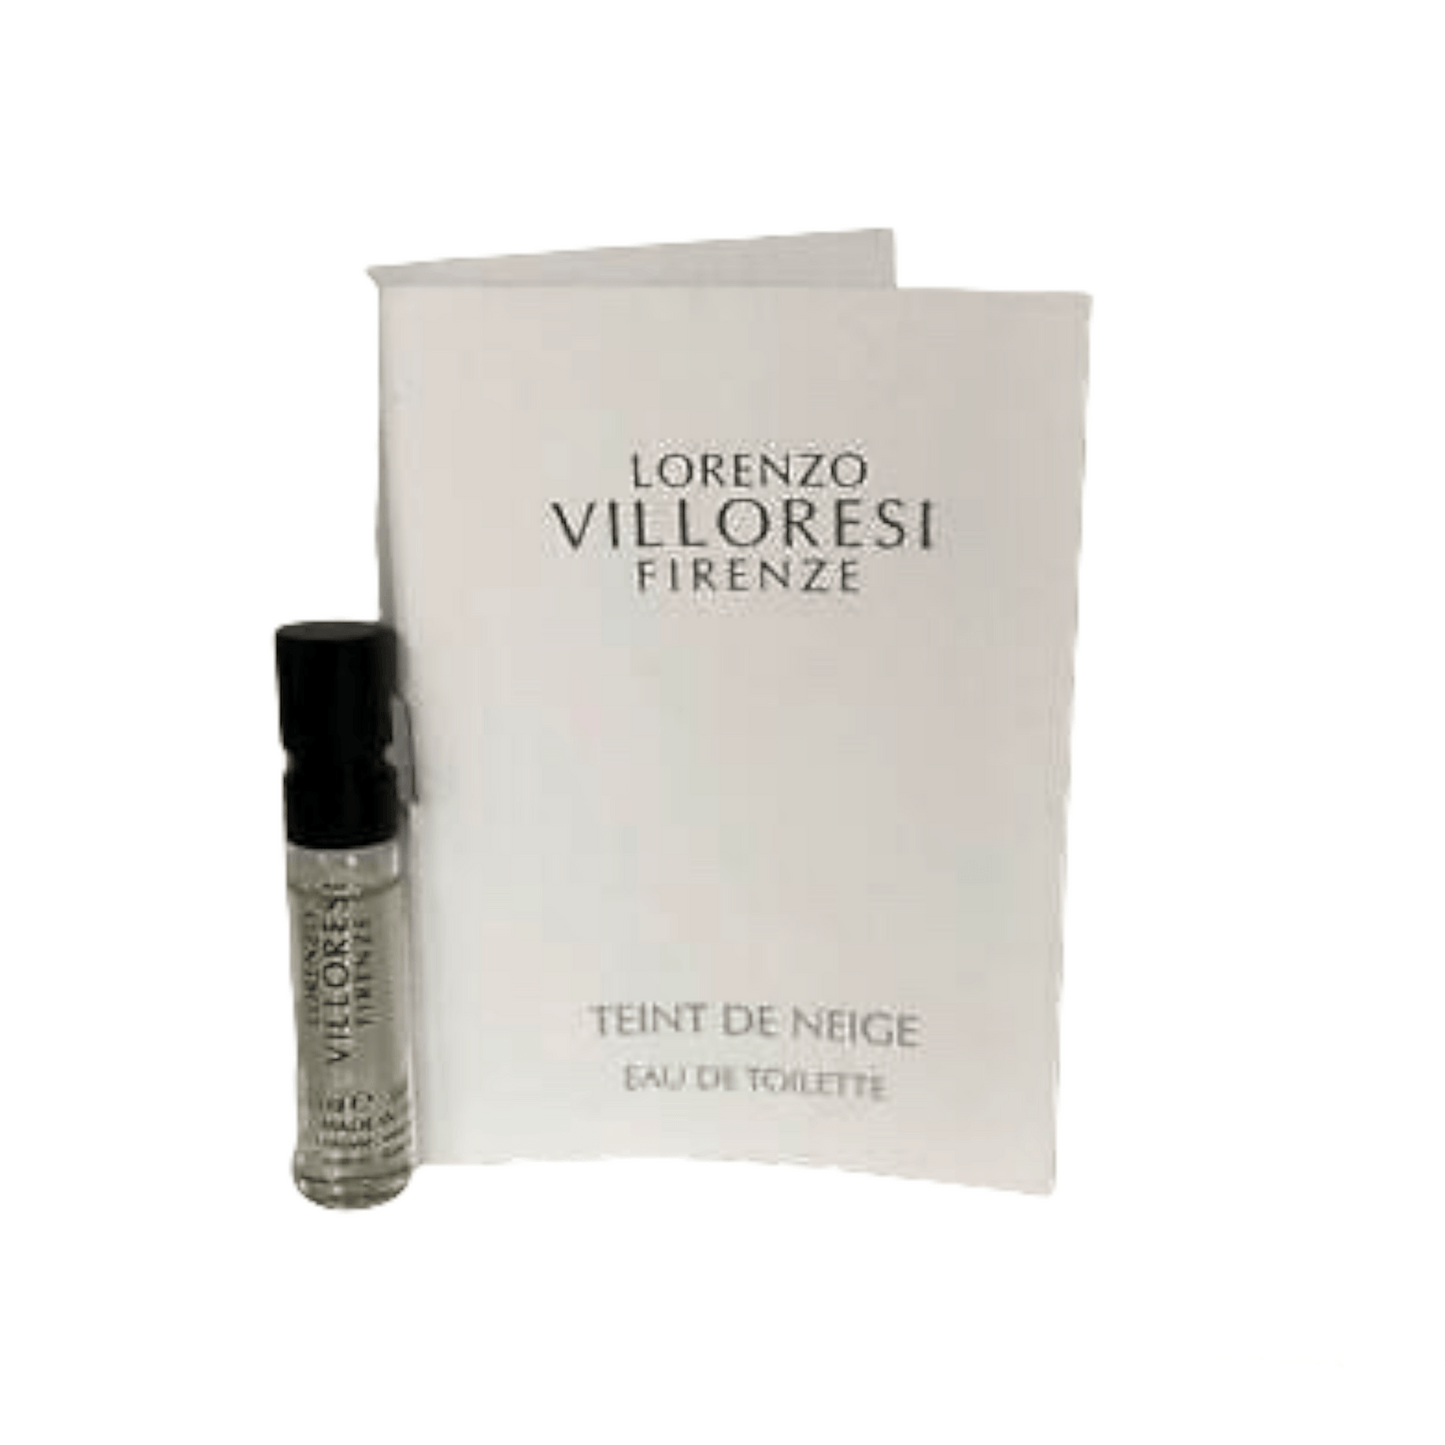 Lorenzo Villoresi Firenze Teint de Neige muestra de aroma oficial 2ml 0.06 fl. onz